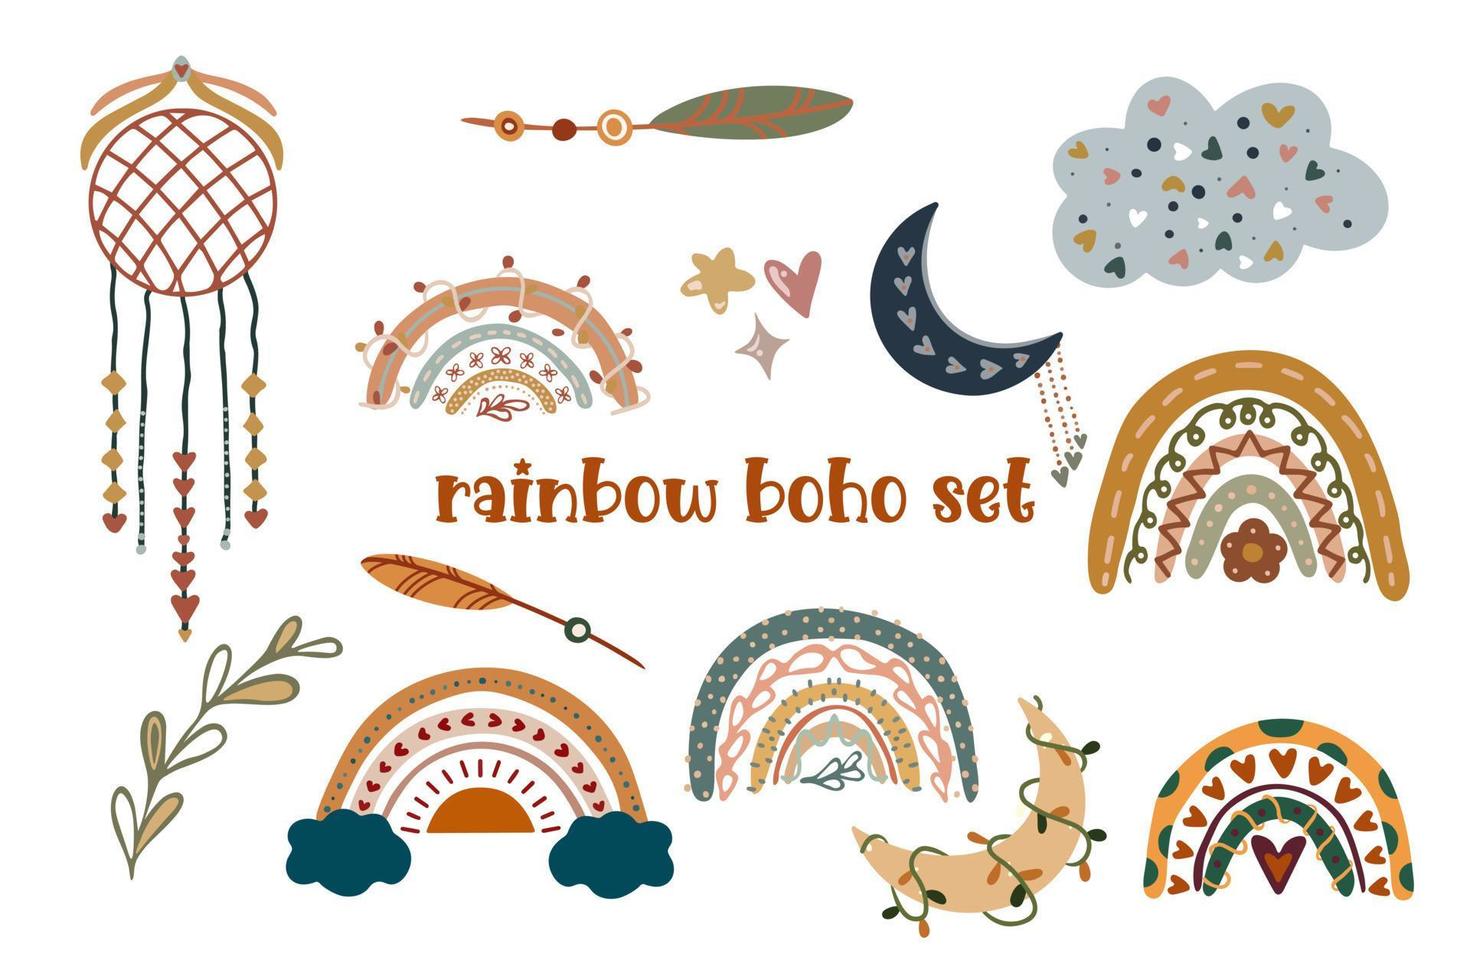 Rainbow boho set clip arts vector